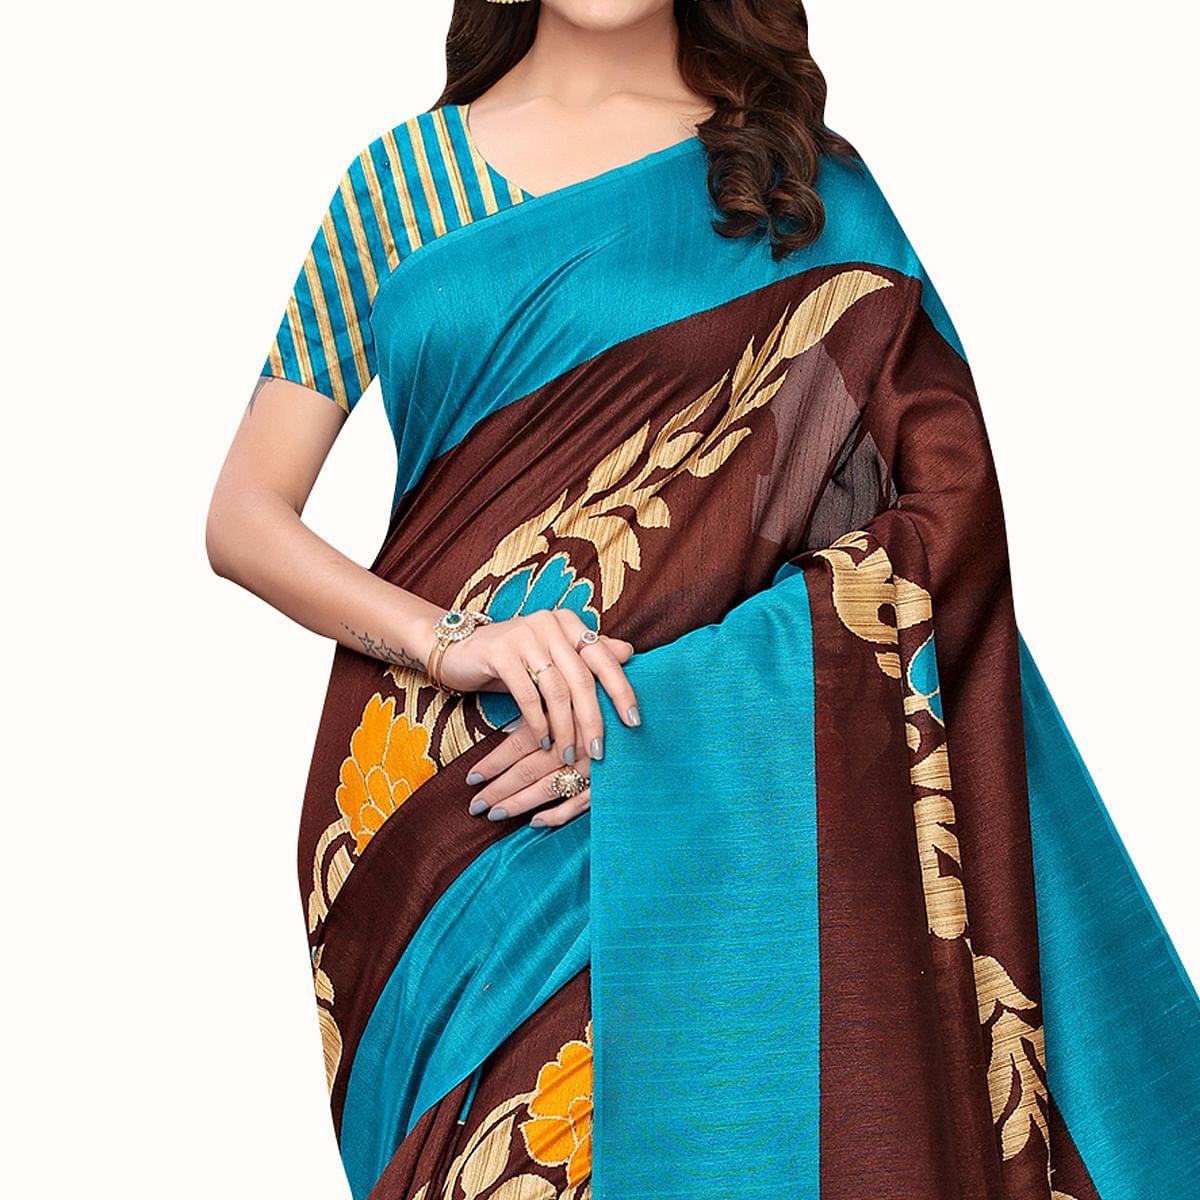 Sophisticated Brown Colored Casual Wear Printed Bhagalpuri Silk Saree - Peachmode